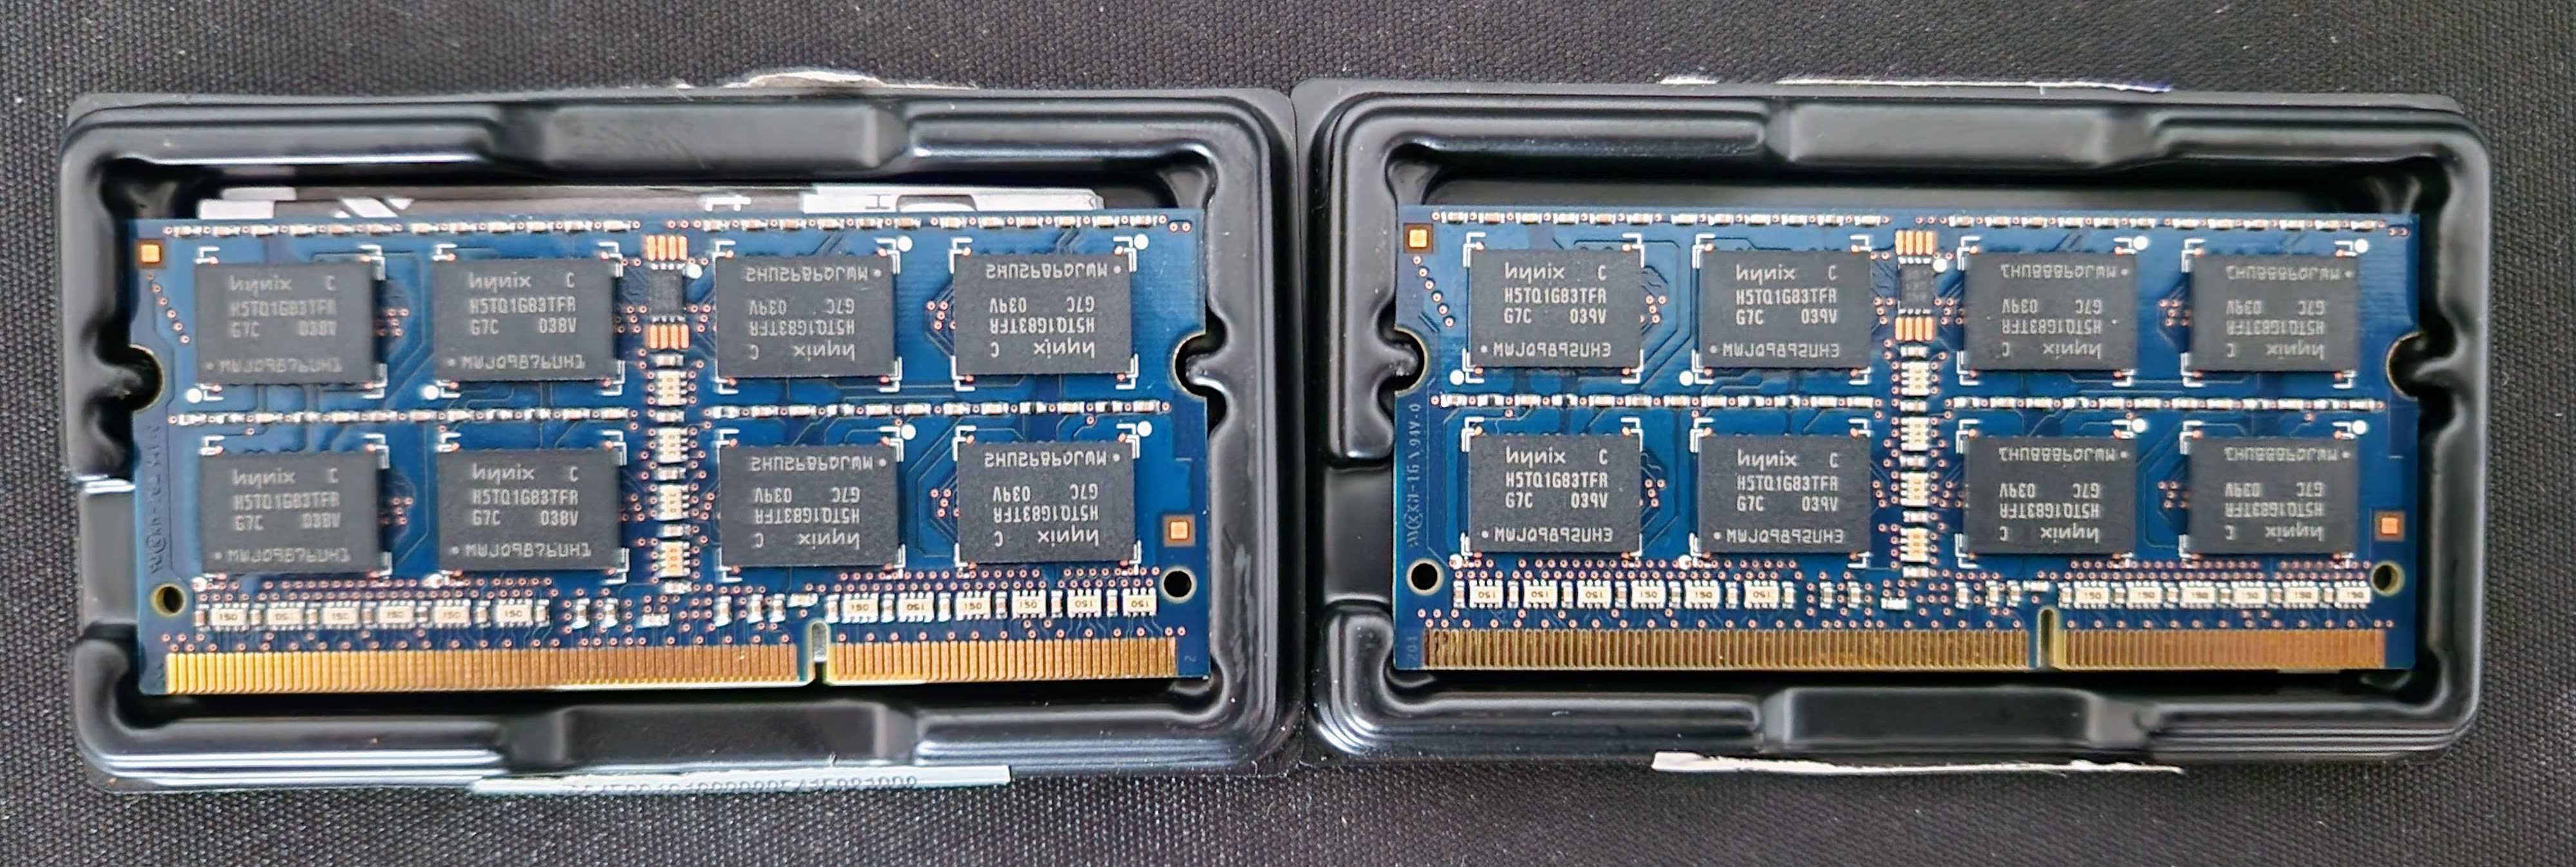 Memória SODIMM-PC3 2GB DDR3 1333MHz CL9